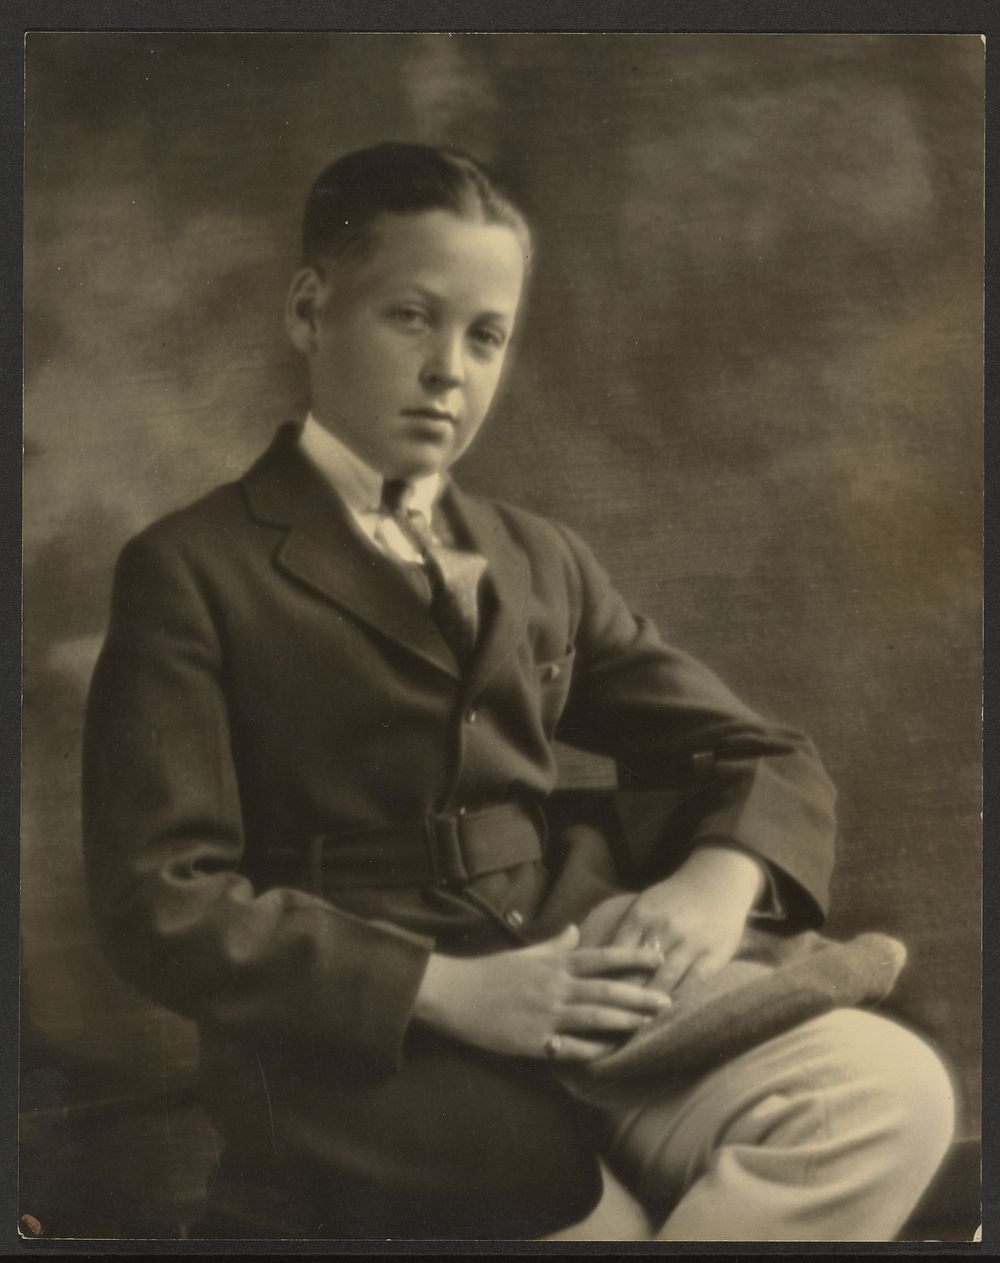 Portrait of a Boy with Cap on Knee by Louis Fleckenstein